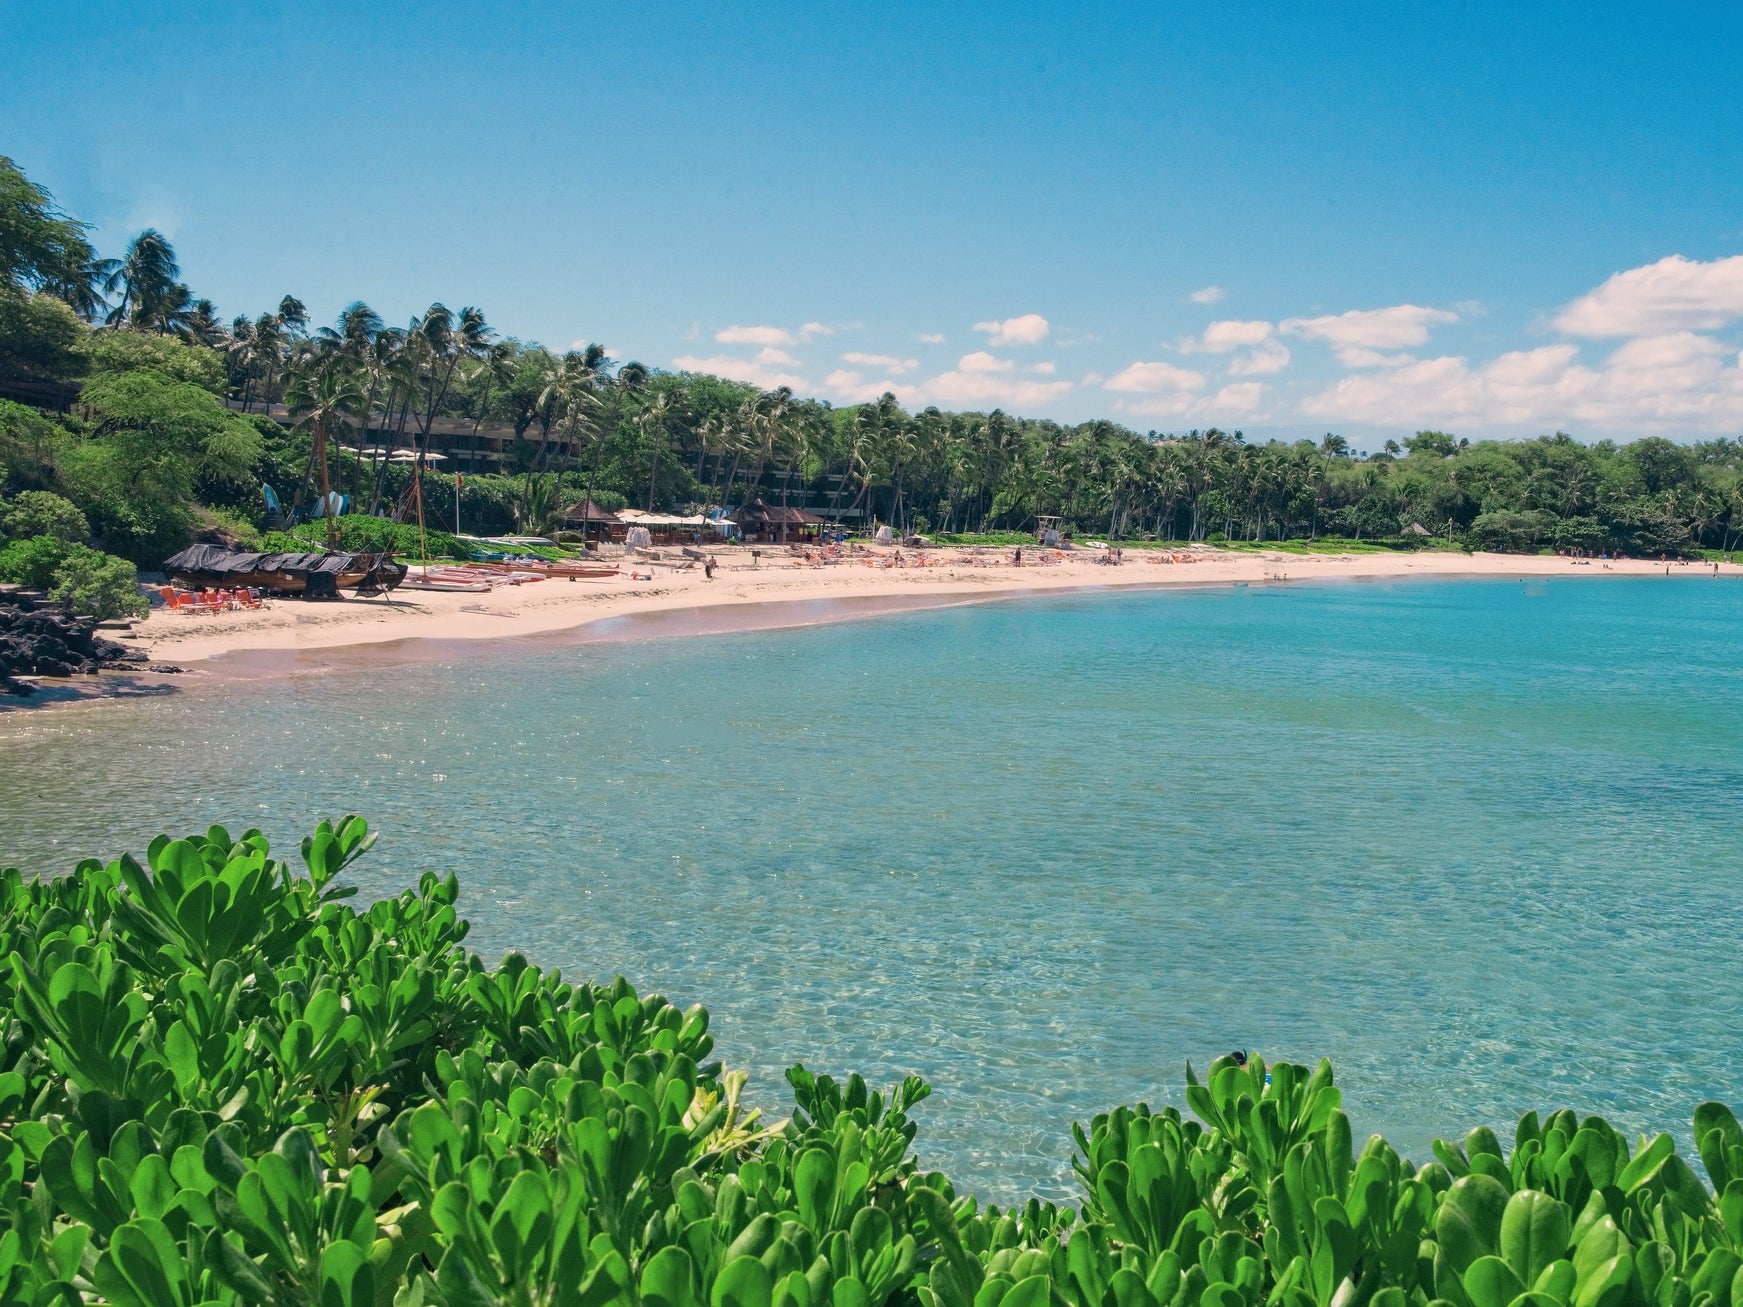 The beach is on Hawaii’s Big Island and boasts beautiful white sand